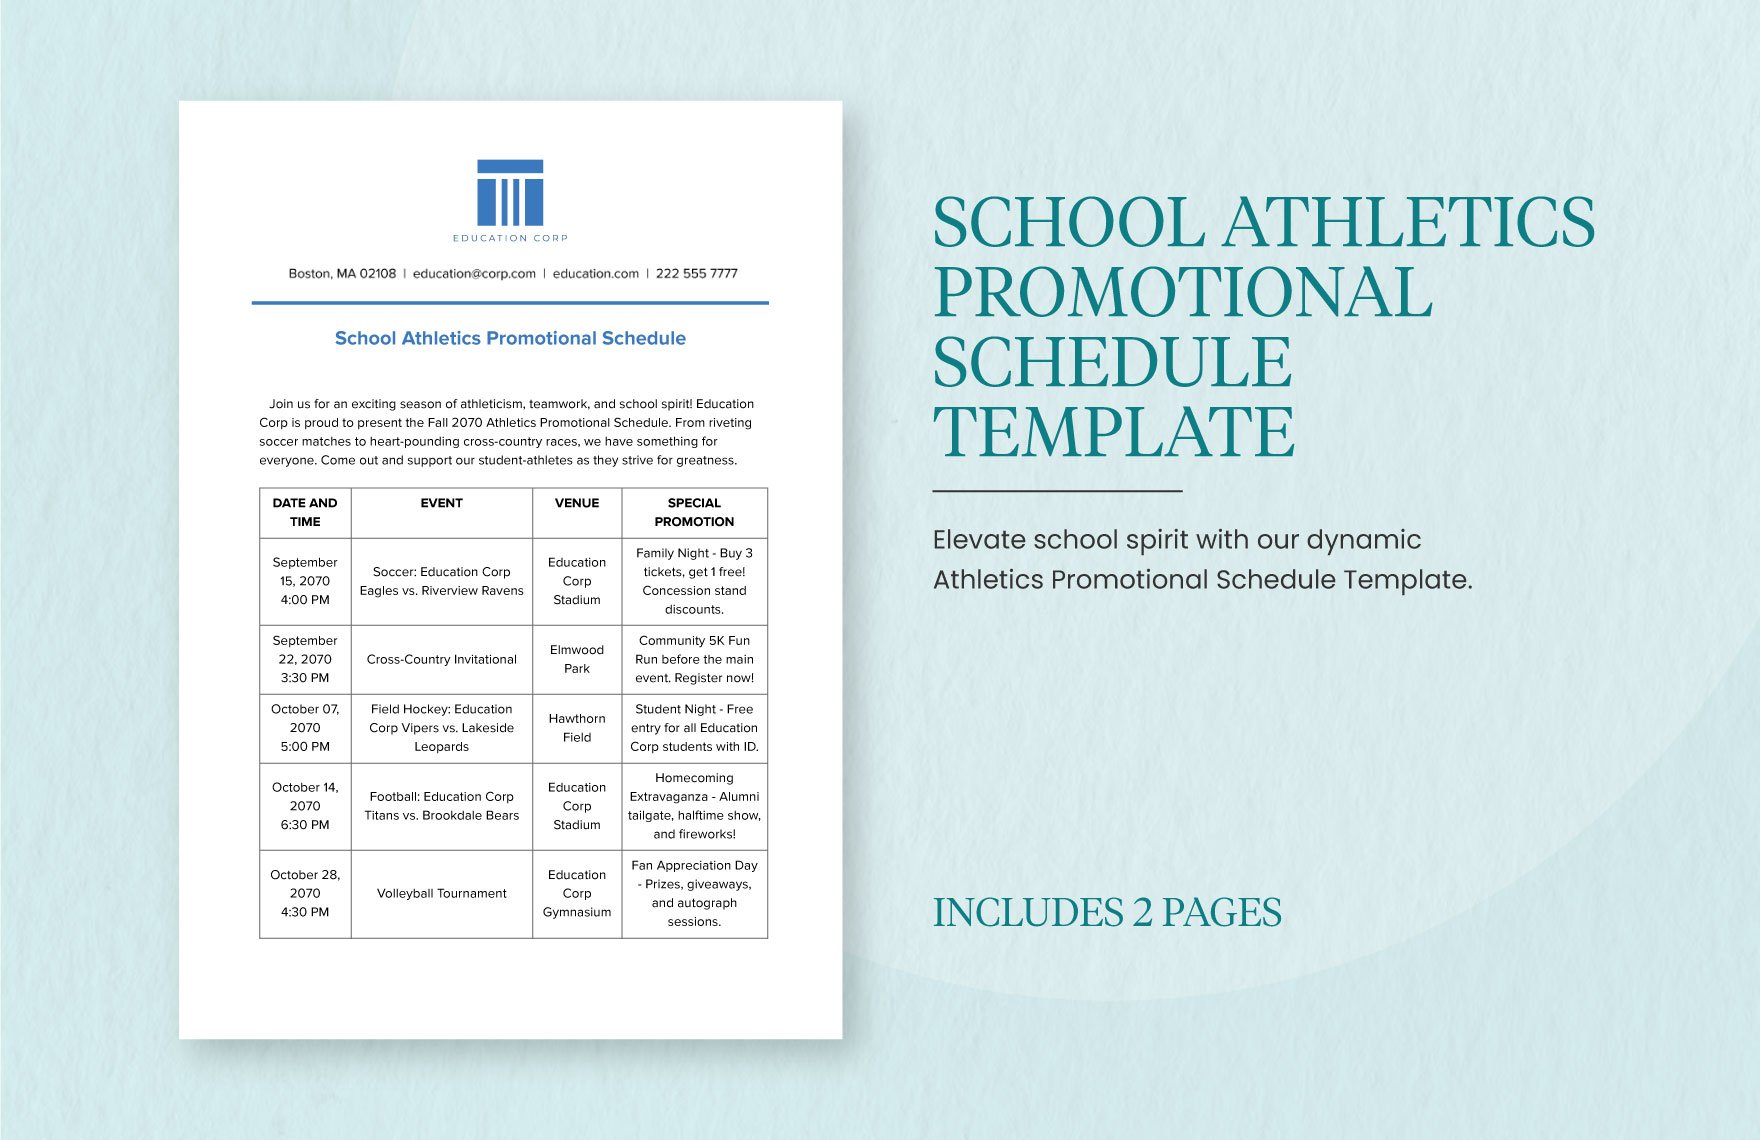 School Athletics Promotional Schedule Template